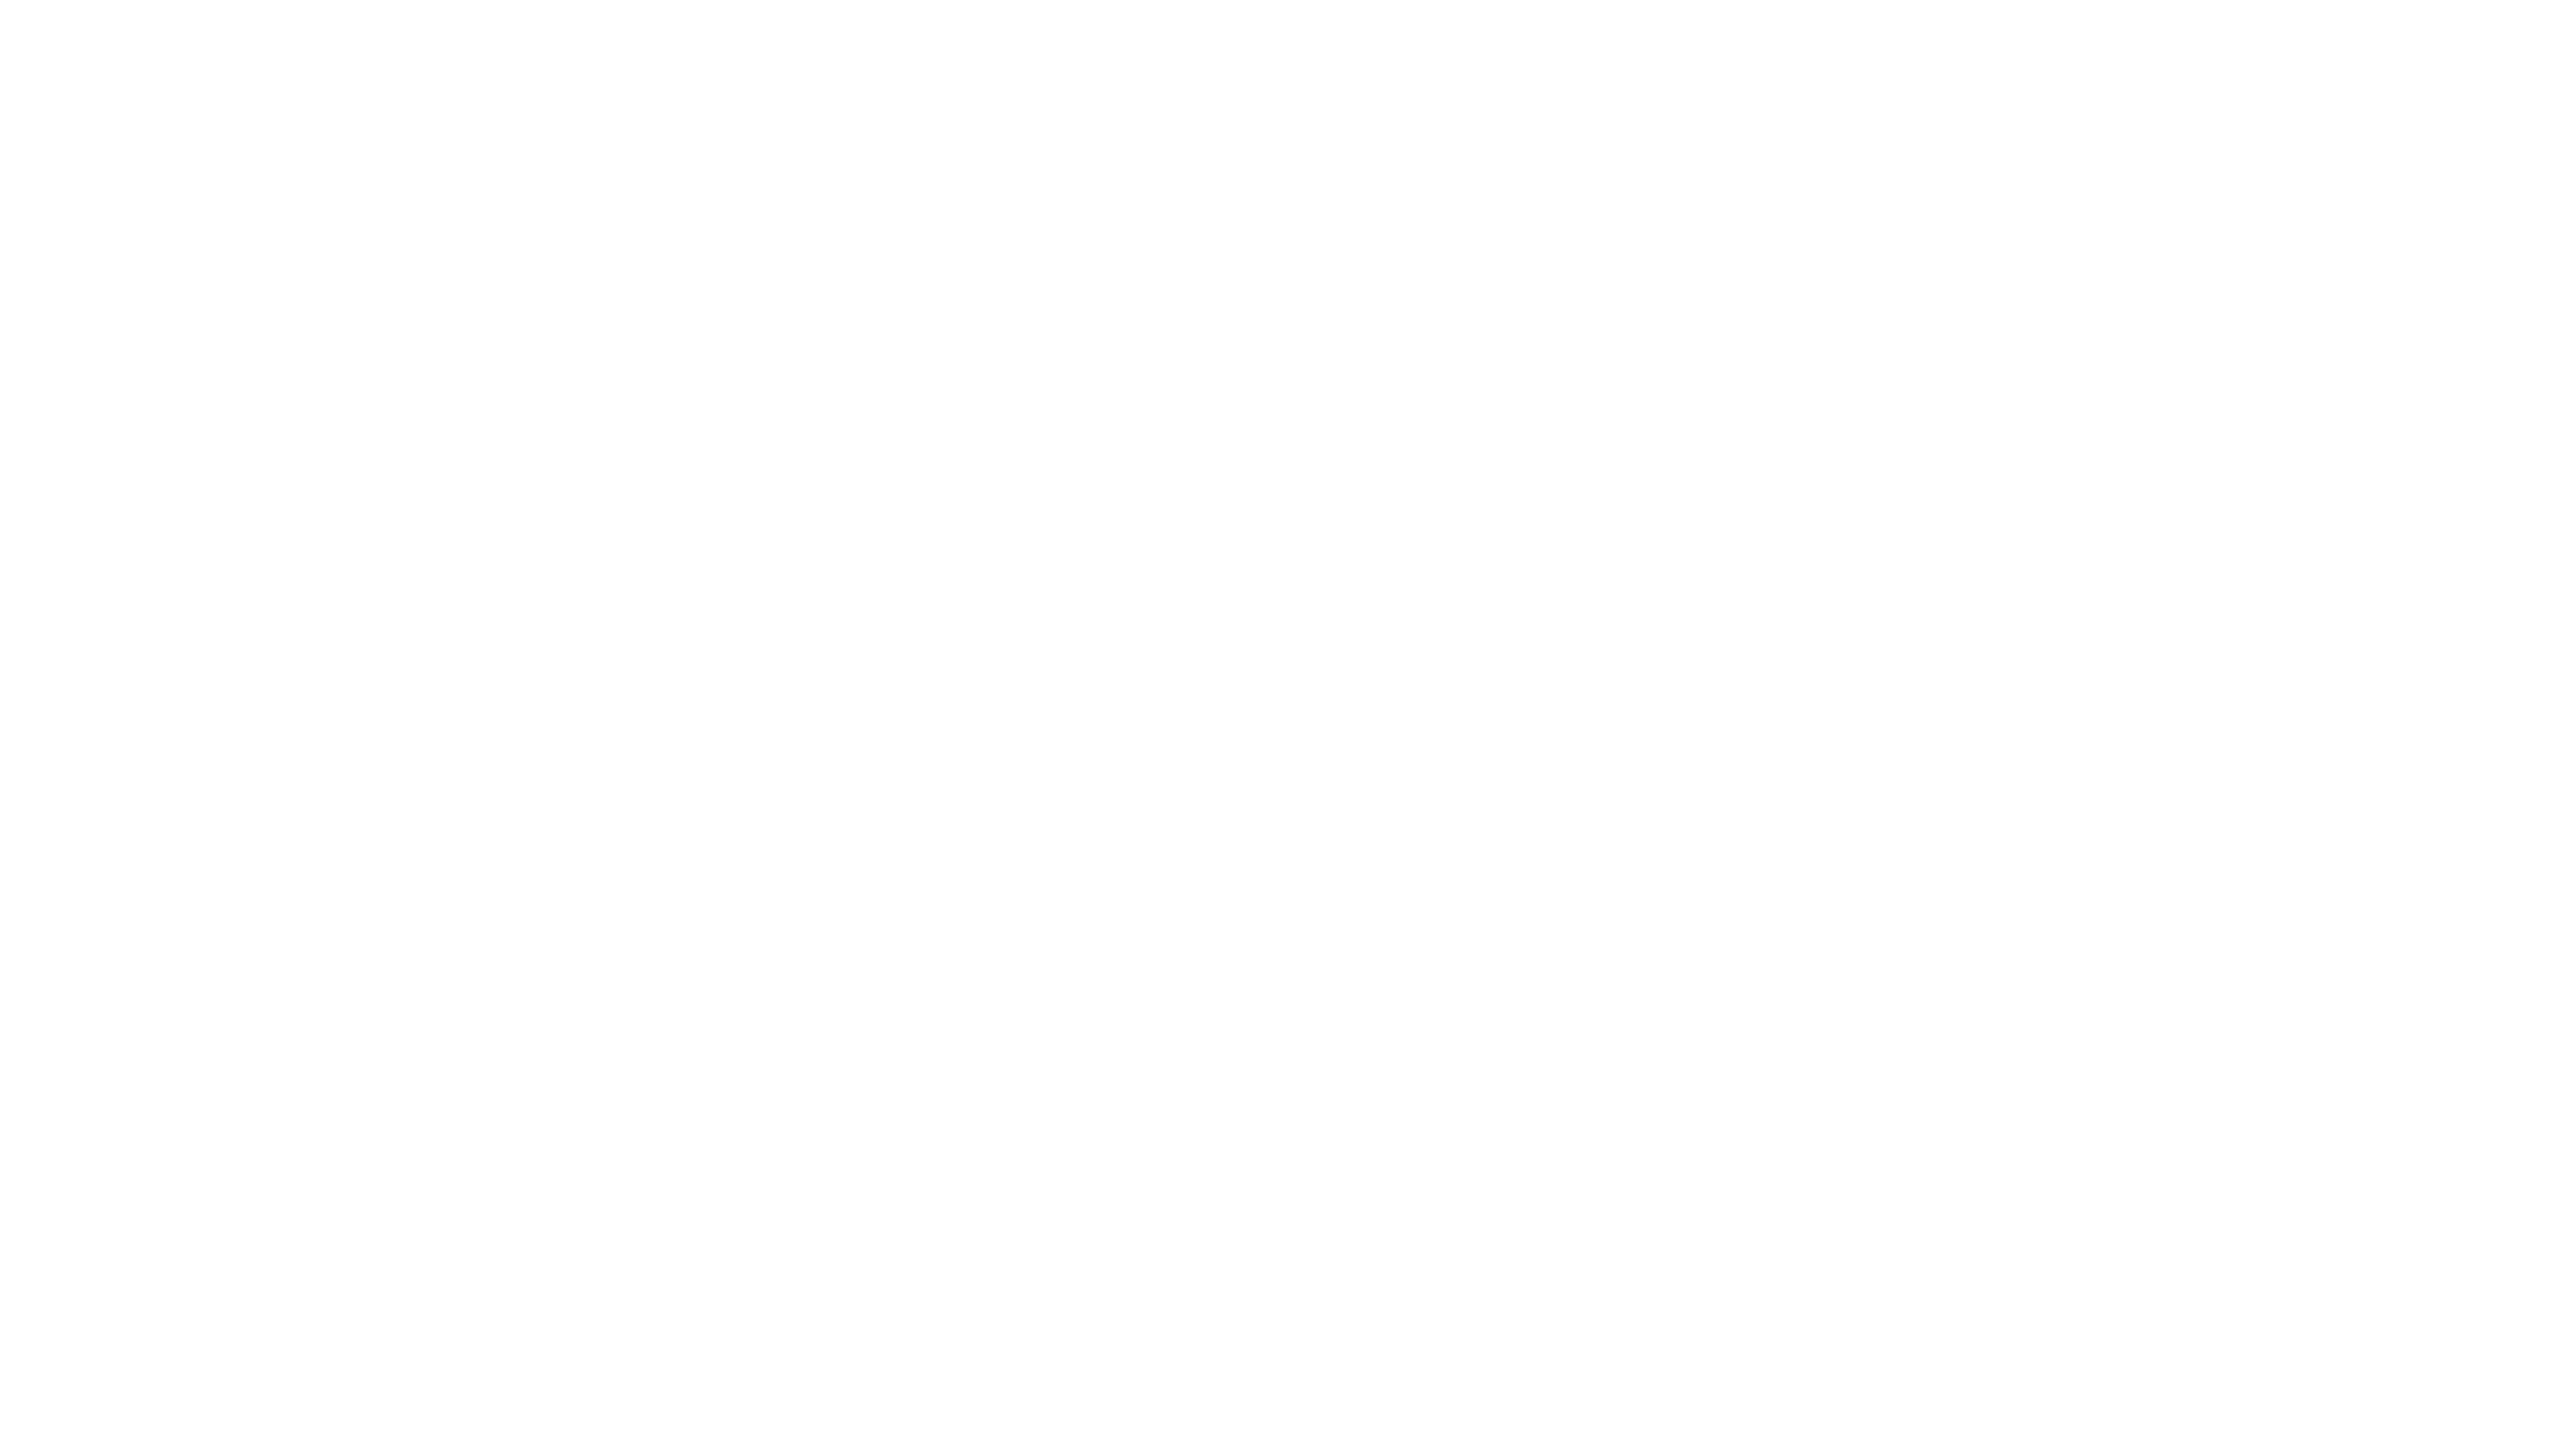 Qlik Logo No Trademark Negative